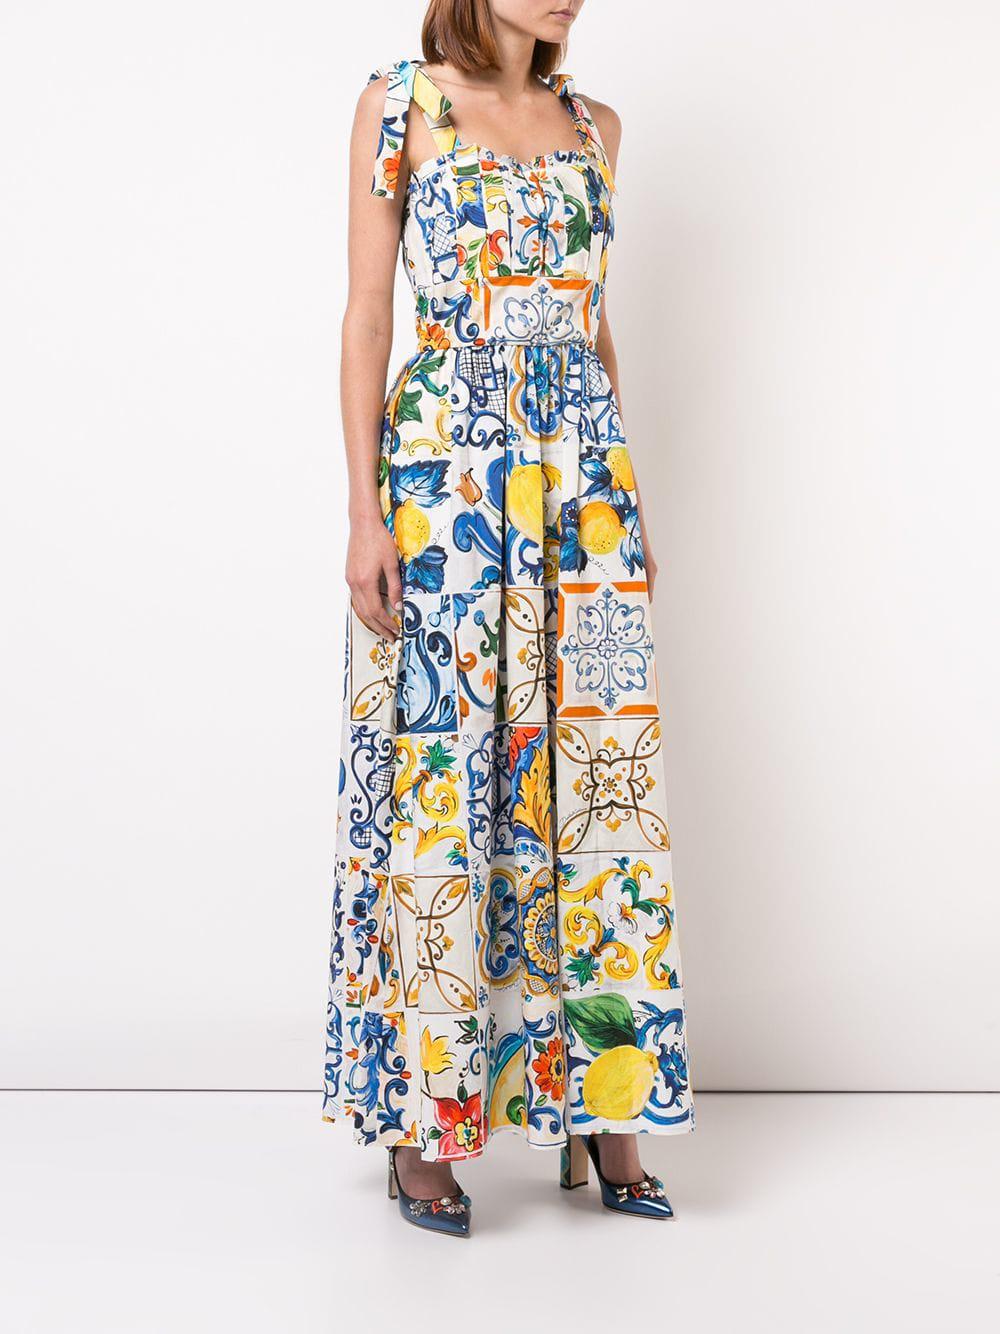 Dolce & Gabbana Majolica Print Dress in Blue - Lyst